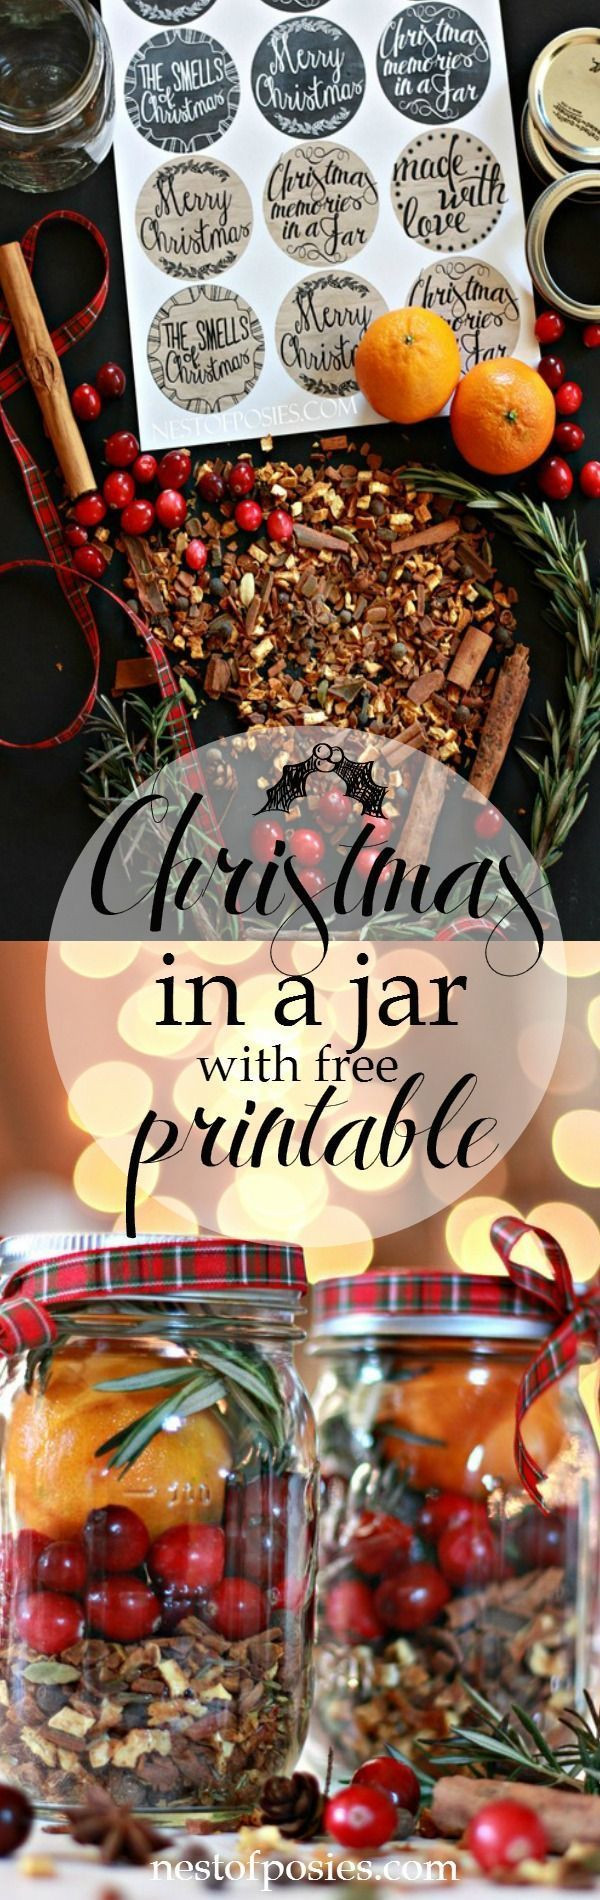 Office Christmas Gift Ideas
 Best 25 fice christmas ts ideas on Pinterest